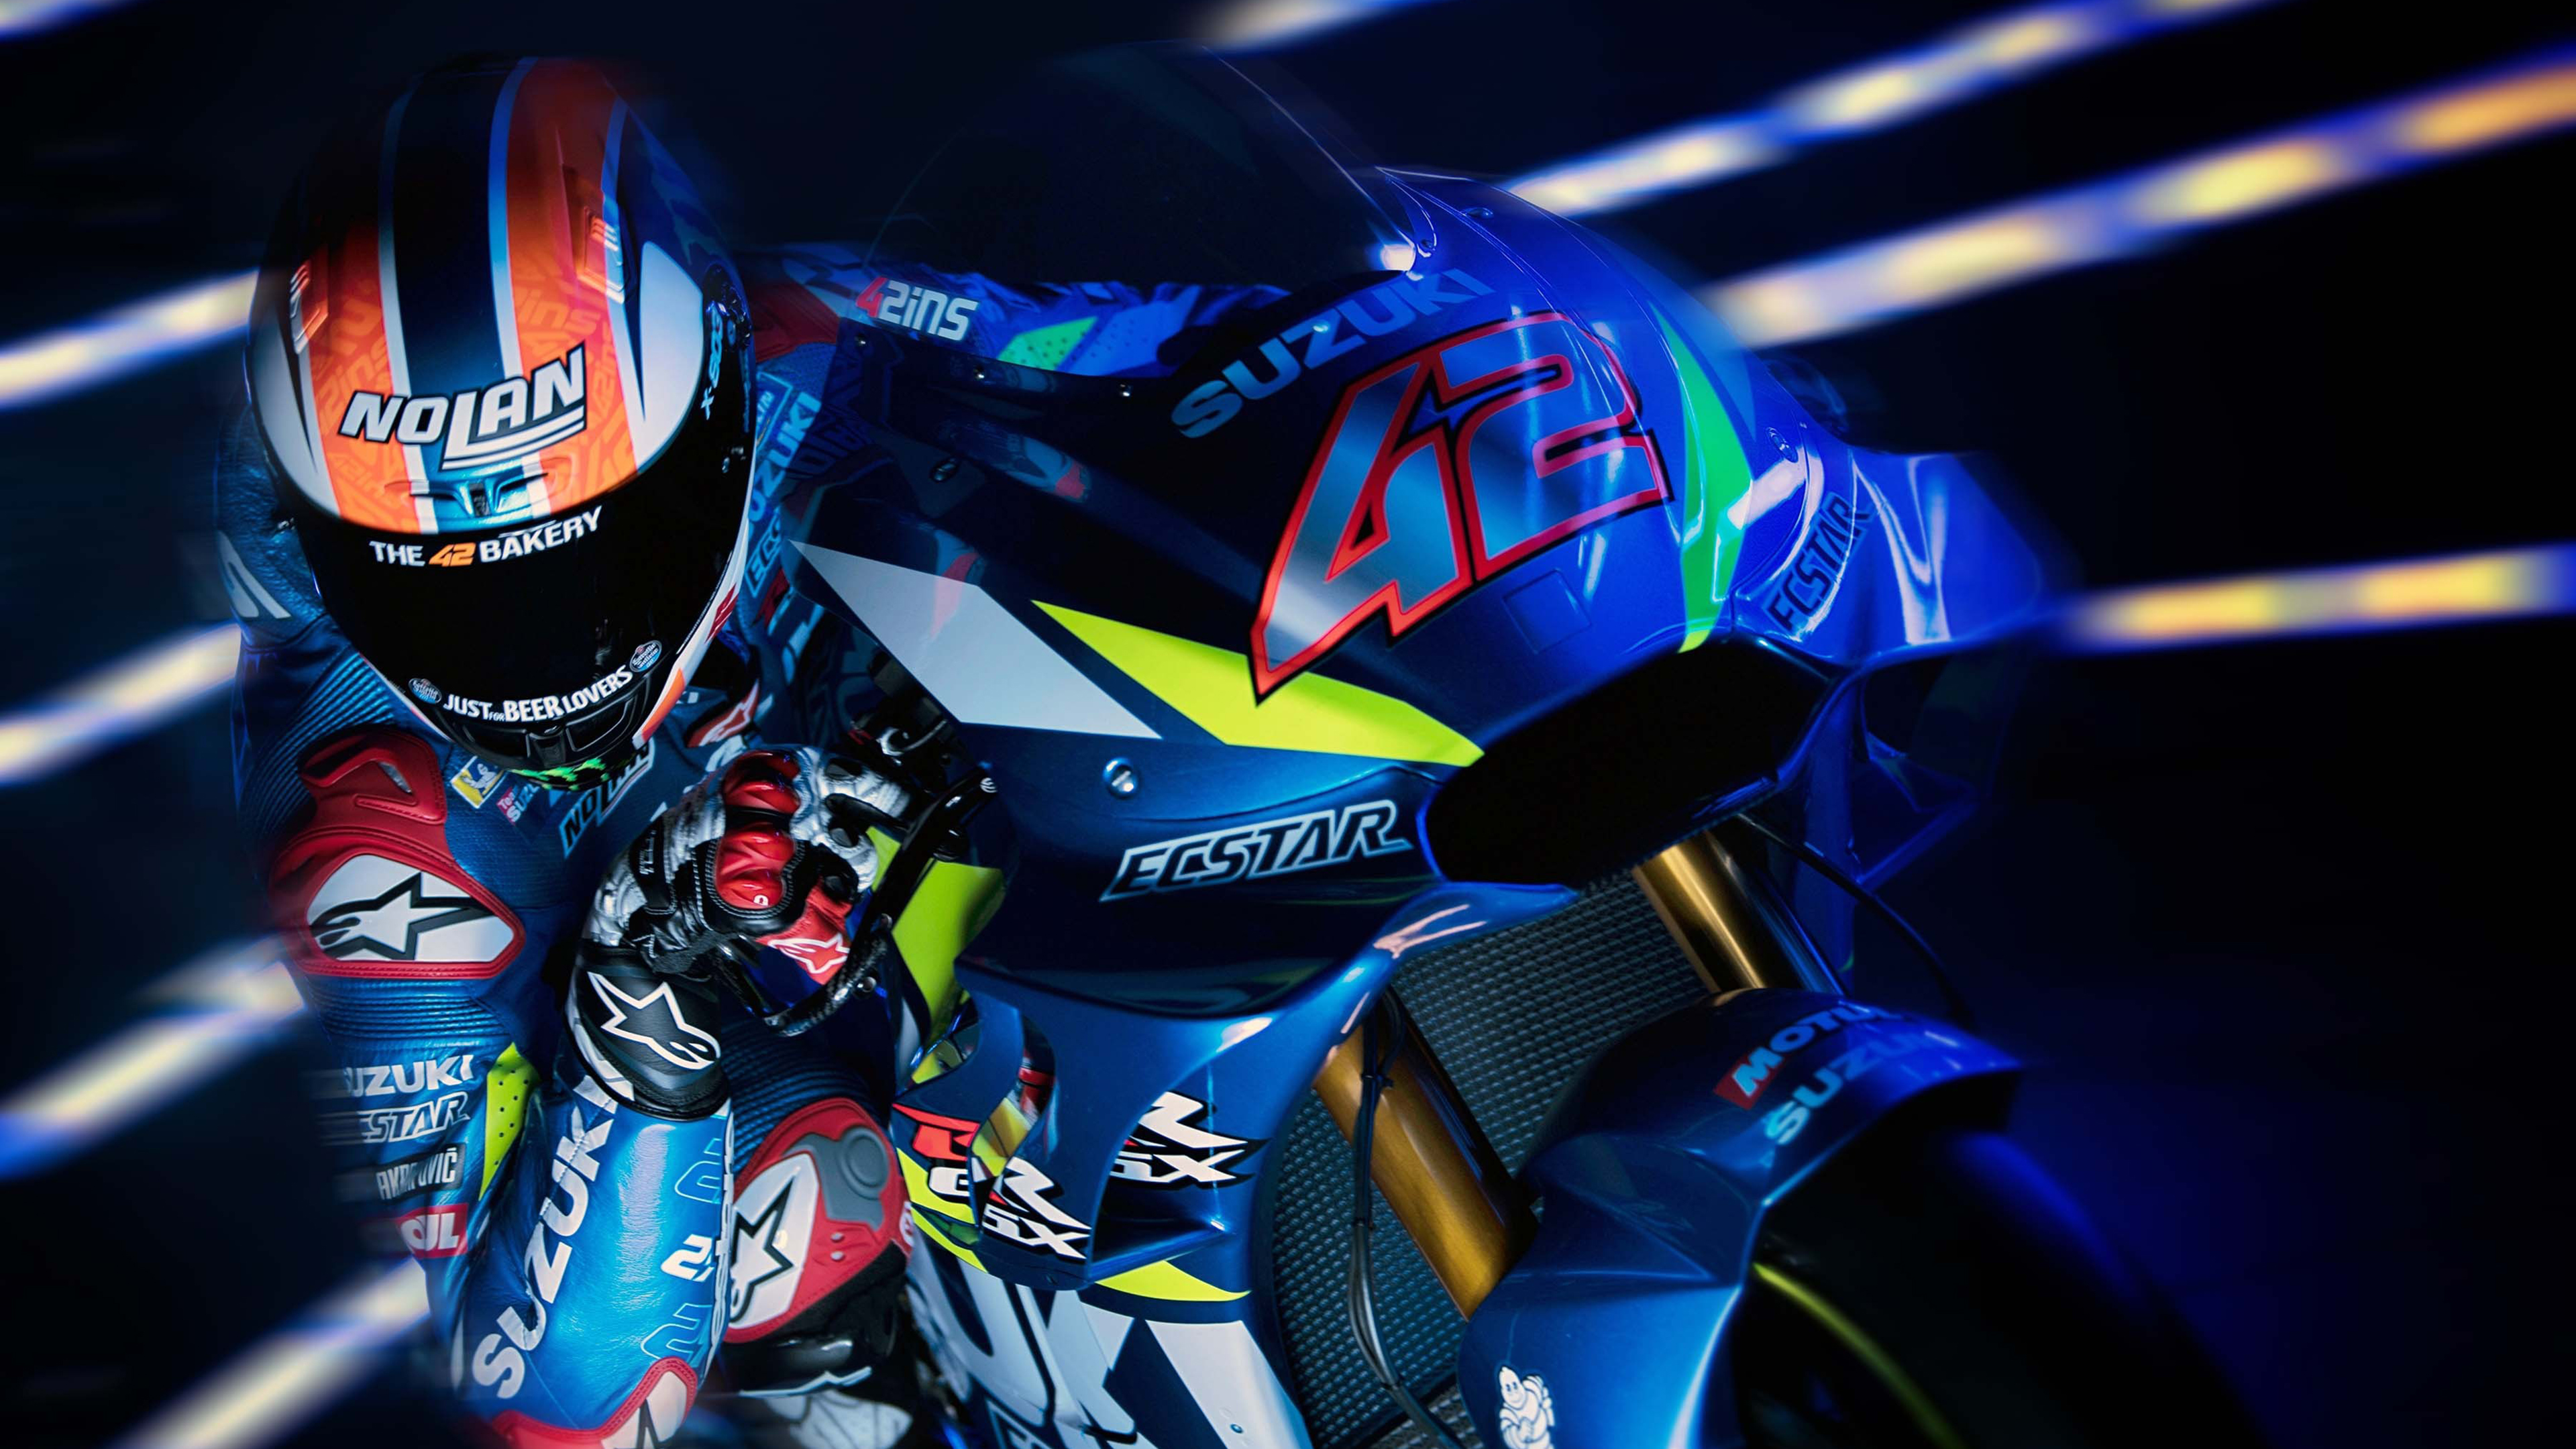 2019 Suzuzki GSX-RR MotoGP 4K Wallpapers | HD Wallpapers